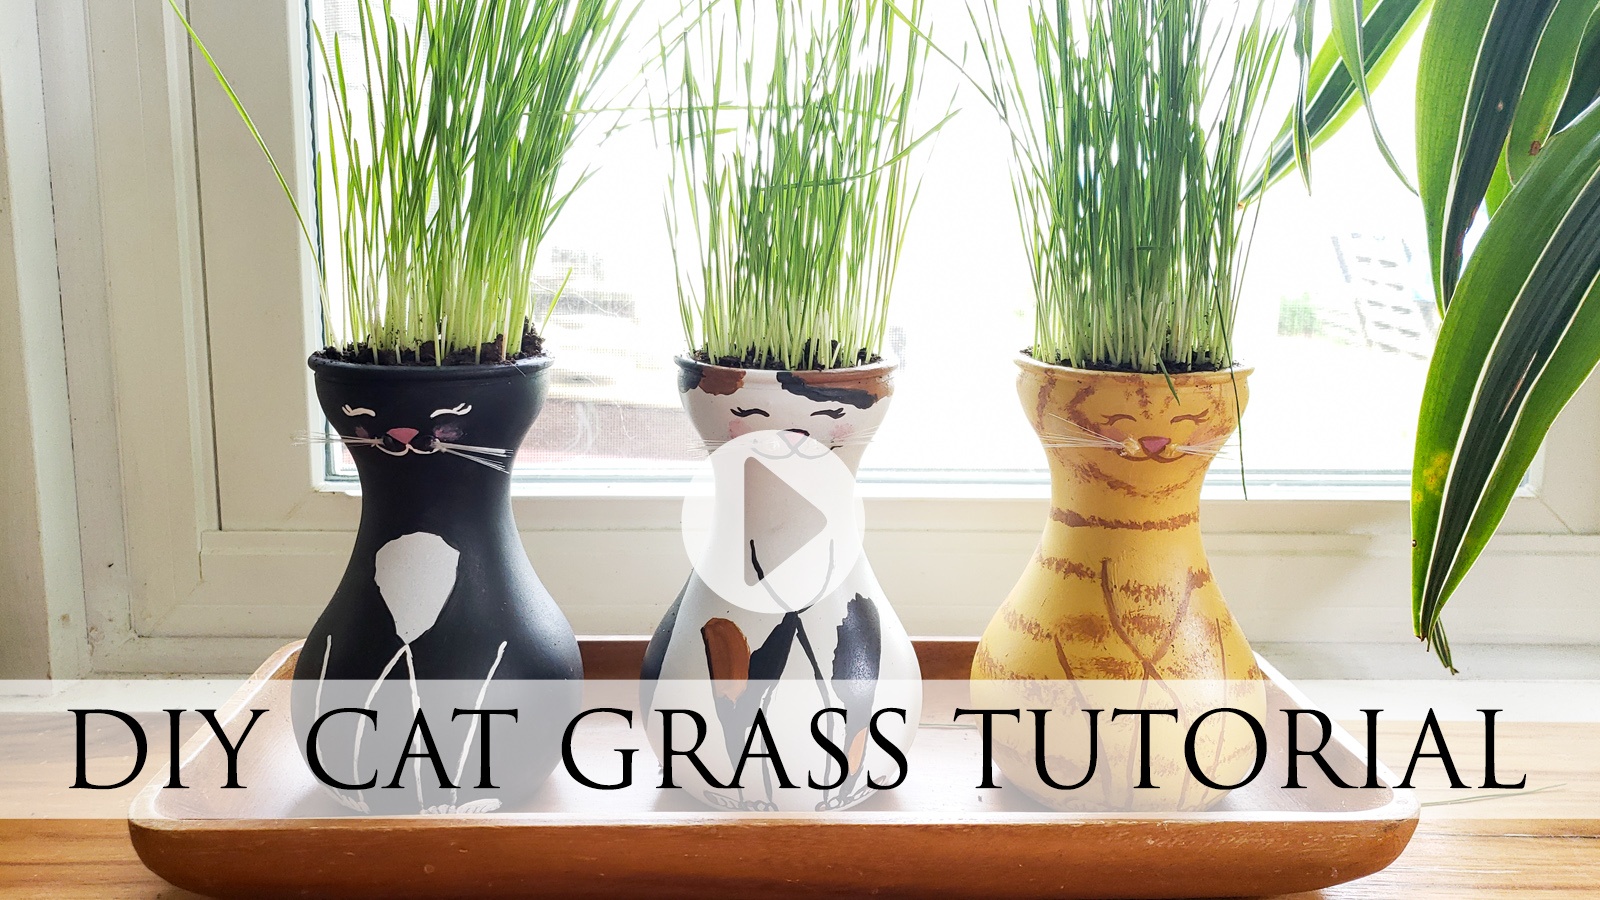 Easy & Fun DIY Cat Grass Tutorial Video by Larissa of Proidgal Pieces | prodigalpieces.com #prodigalpieces